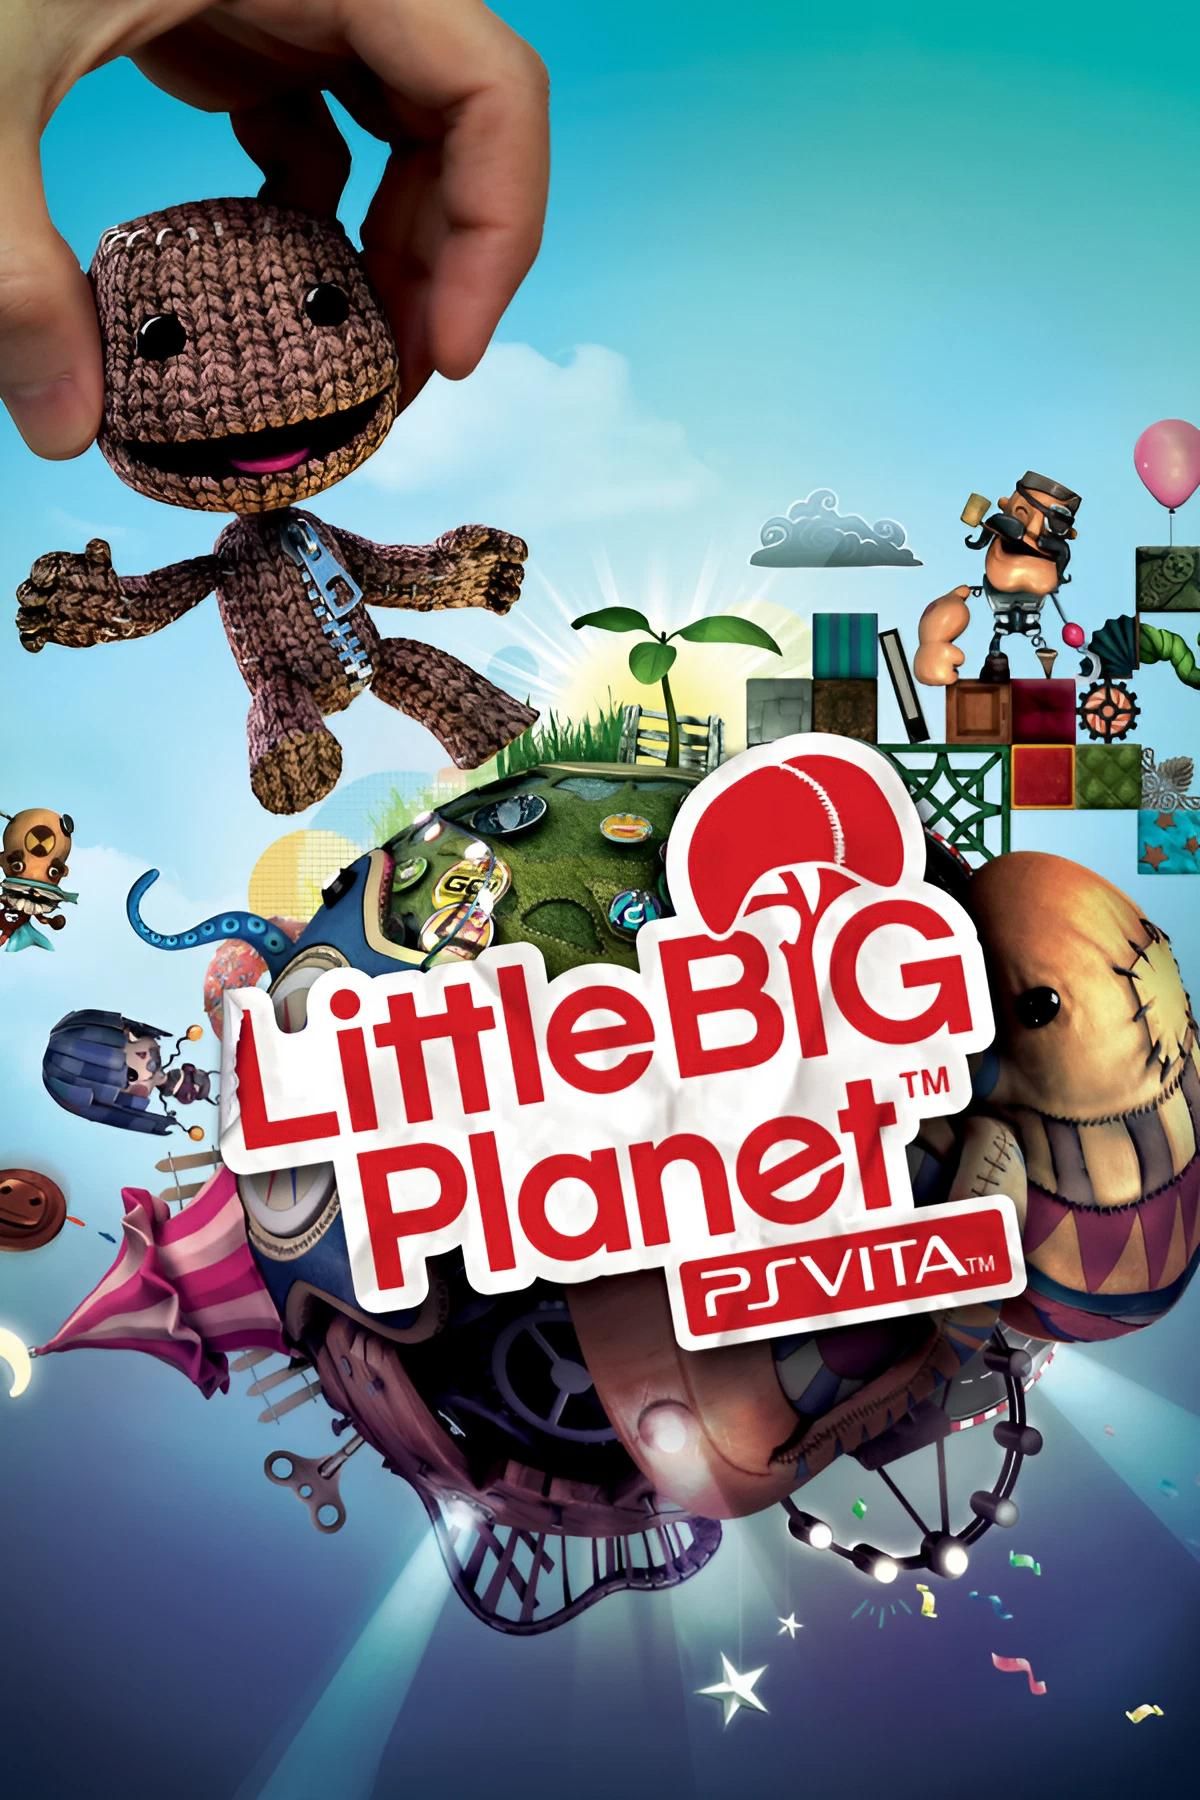 LittleBigPlanet vita